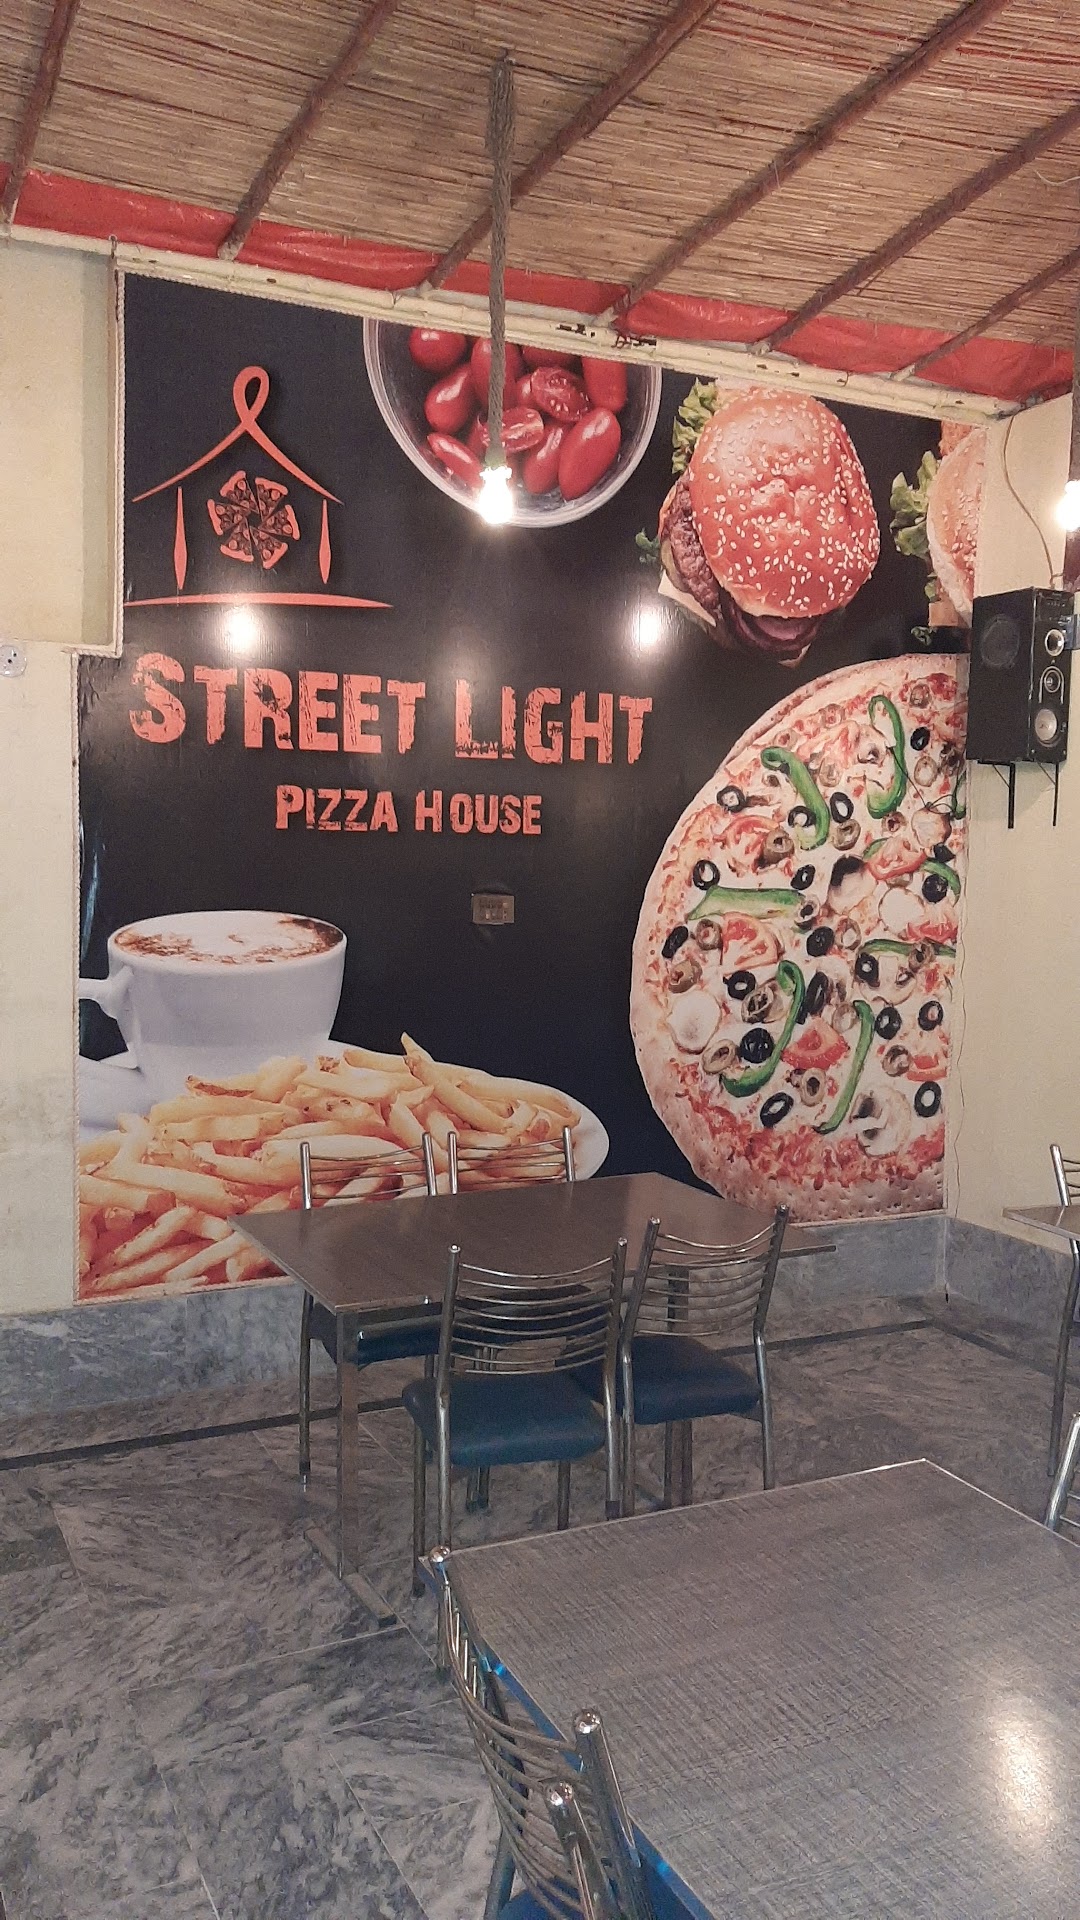 Street light pizza house